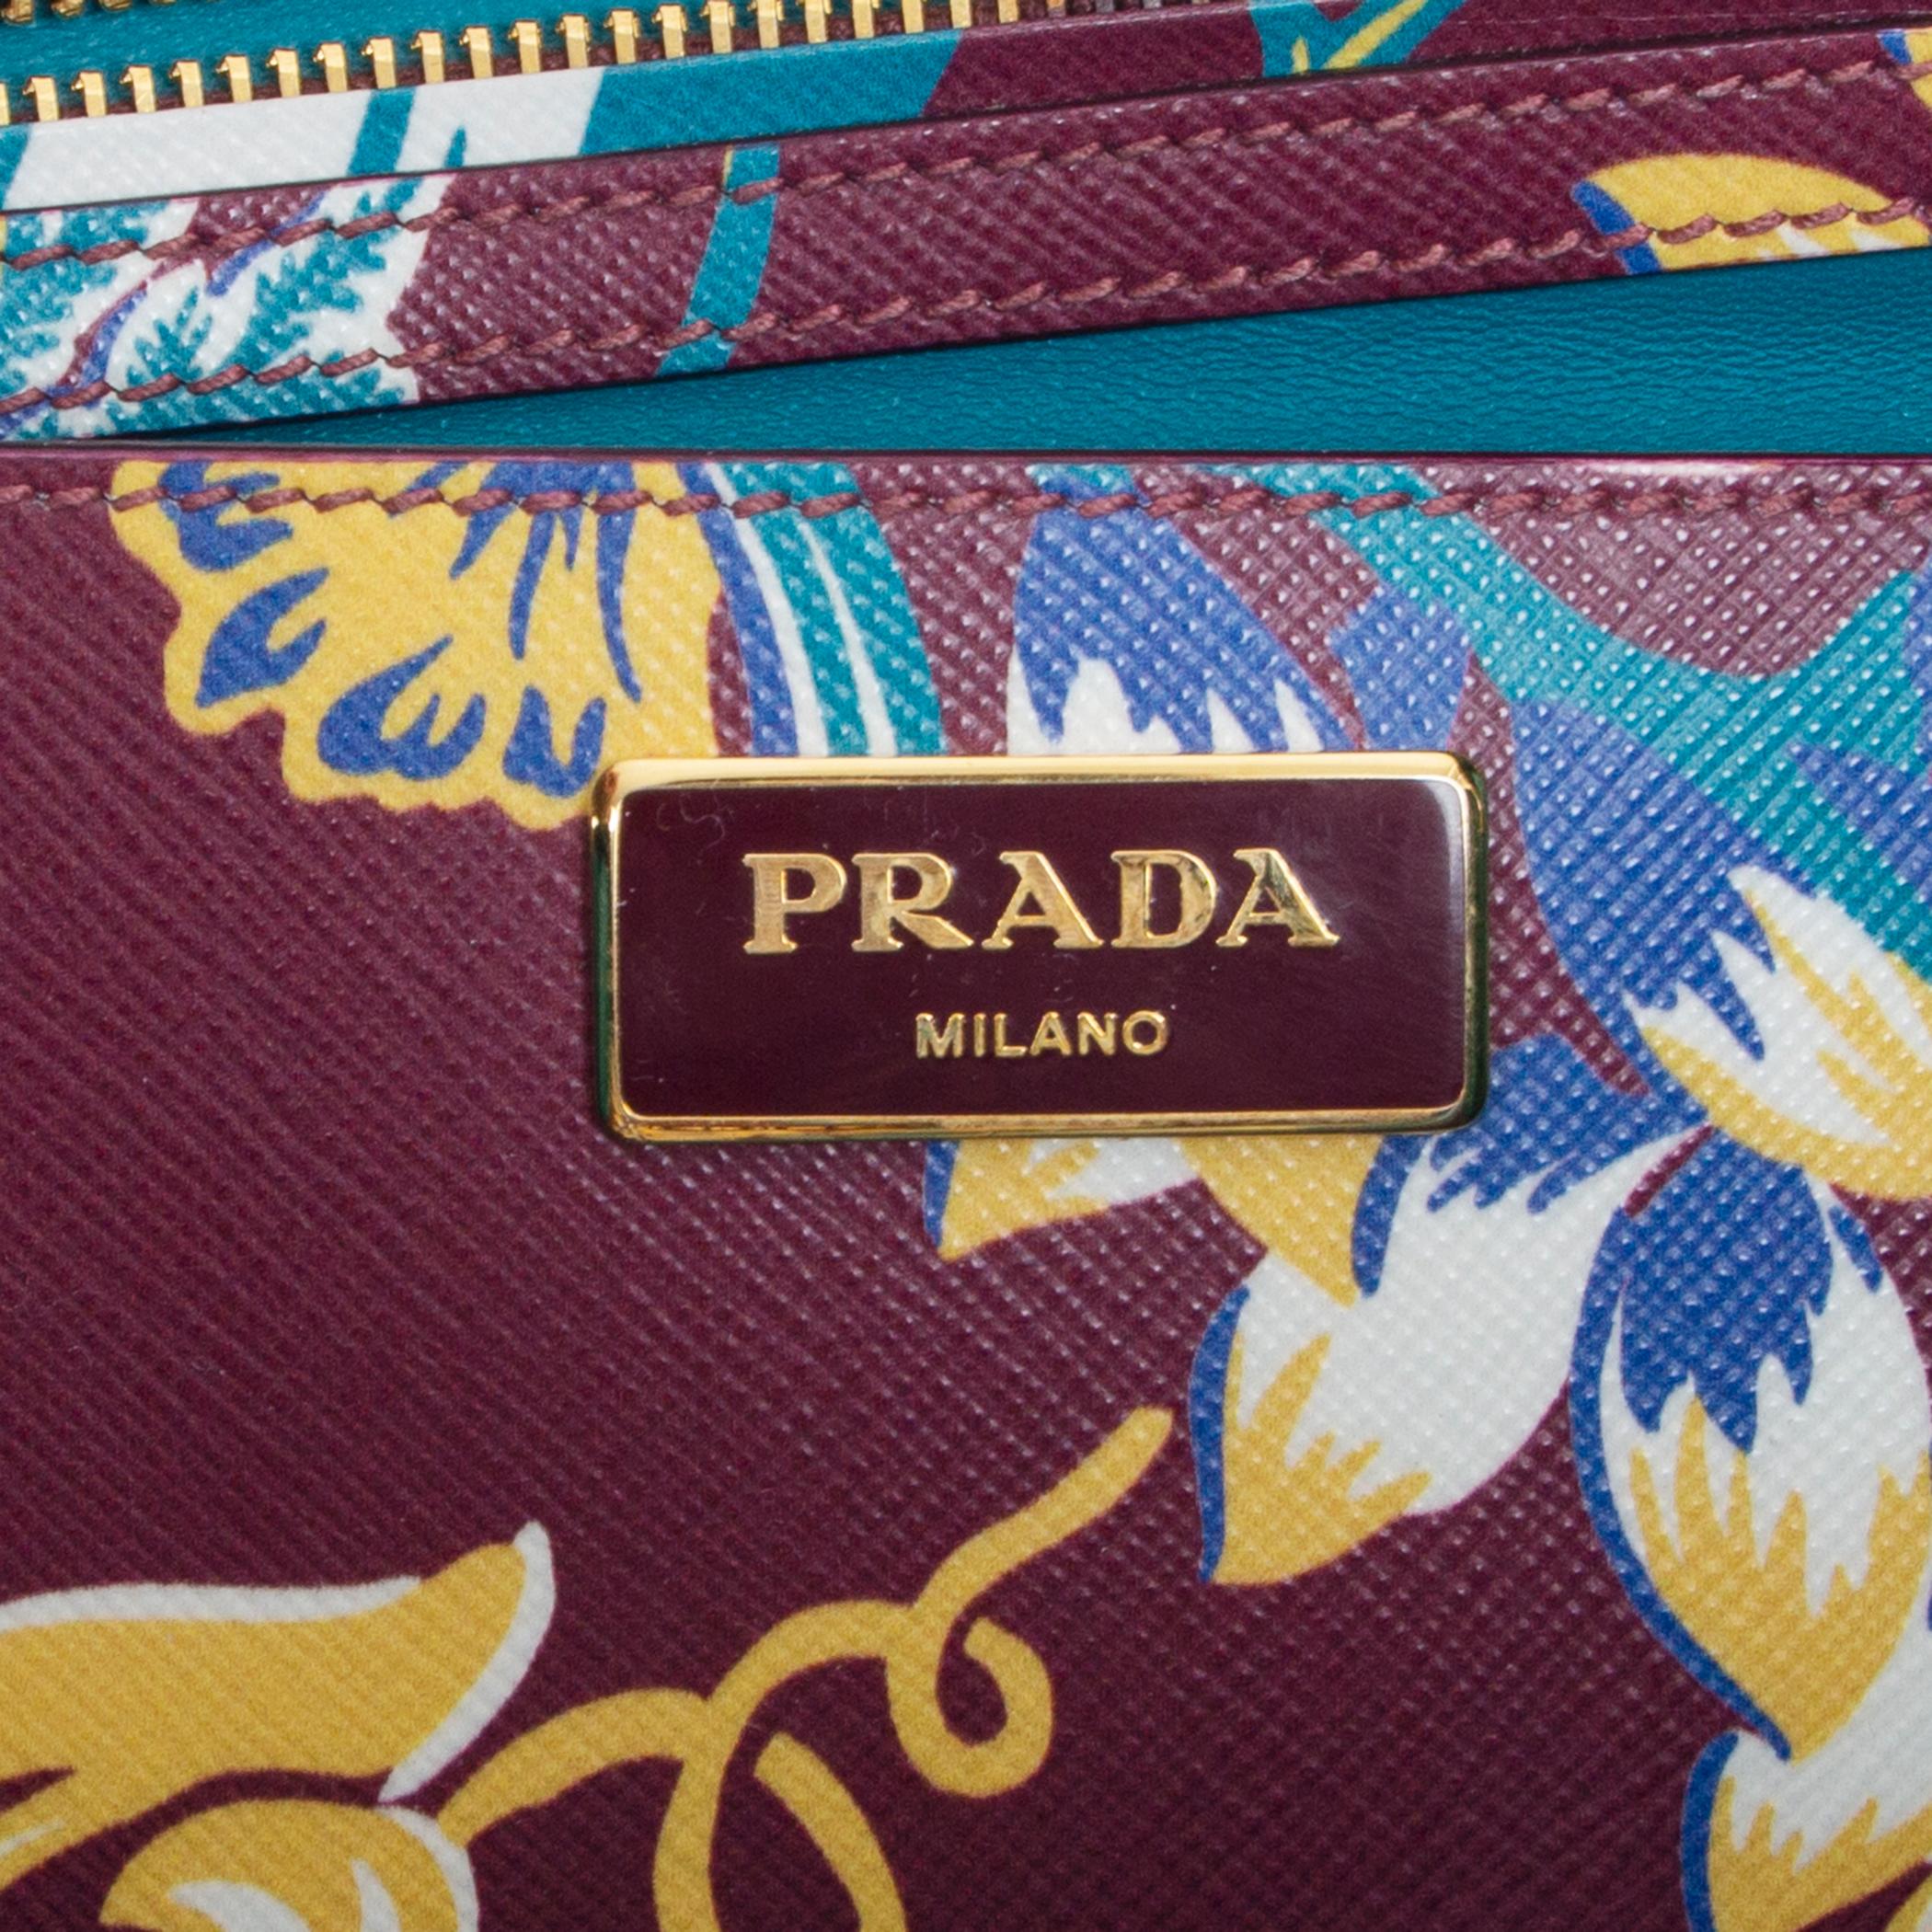 PRADA burgundy Suffiano leather FLORAL BAULETTO Shoulder Bag 1